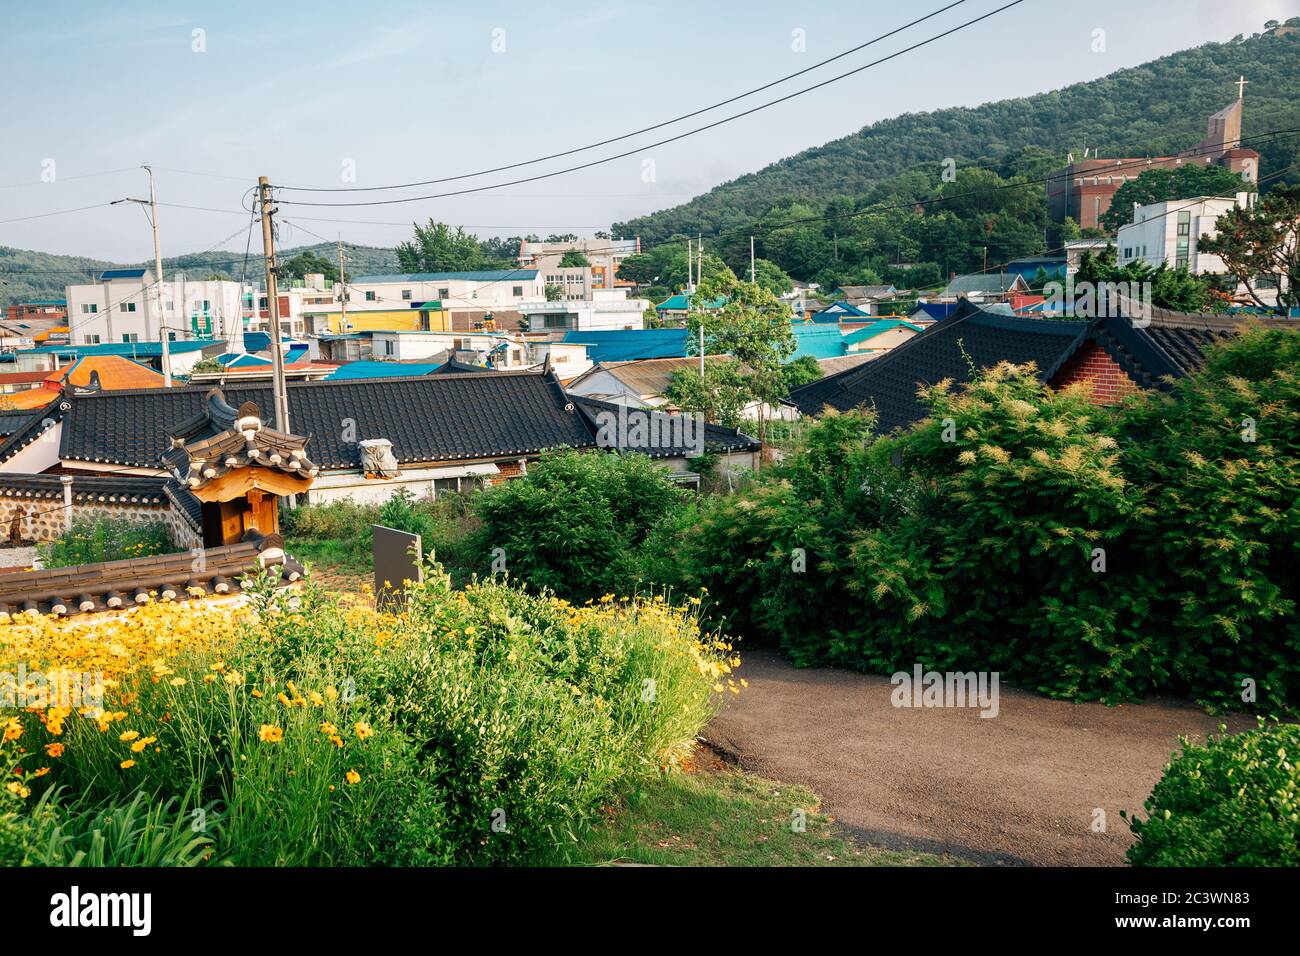 Ganghwa island countryside village in Incheon, Korea Stock Photo